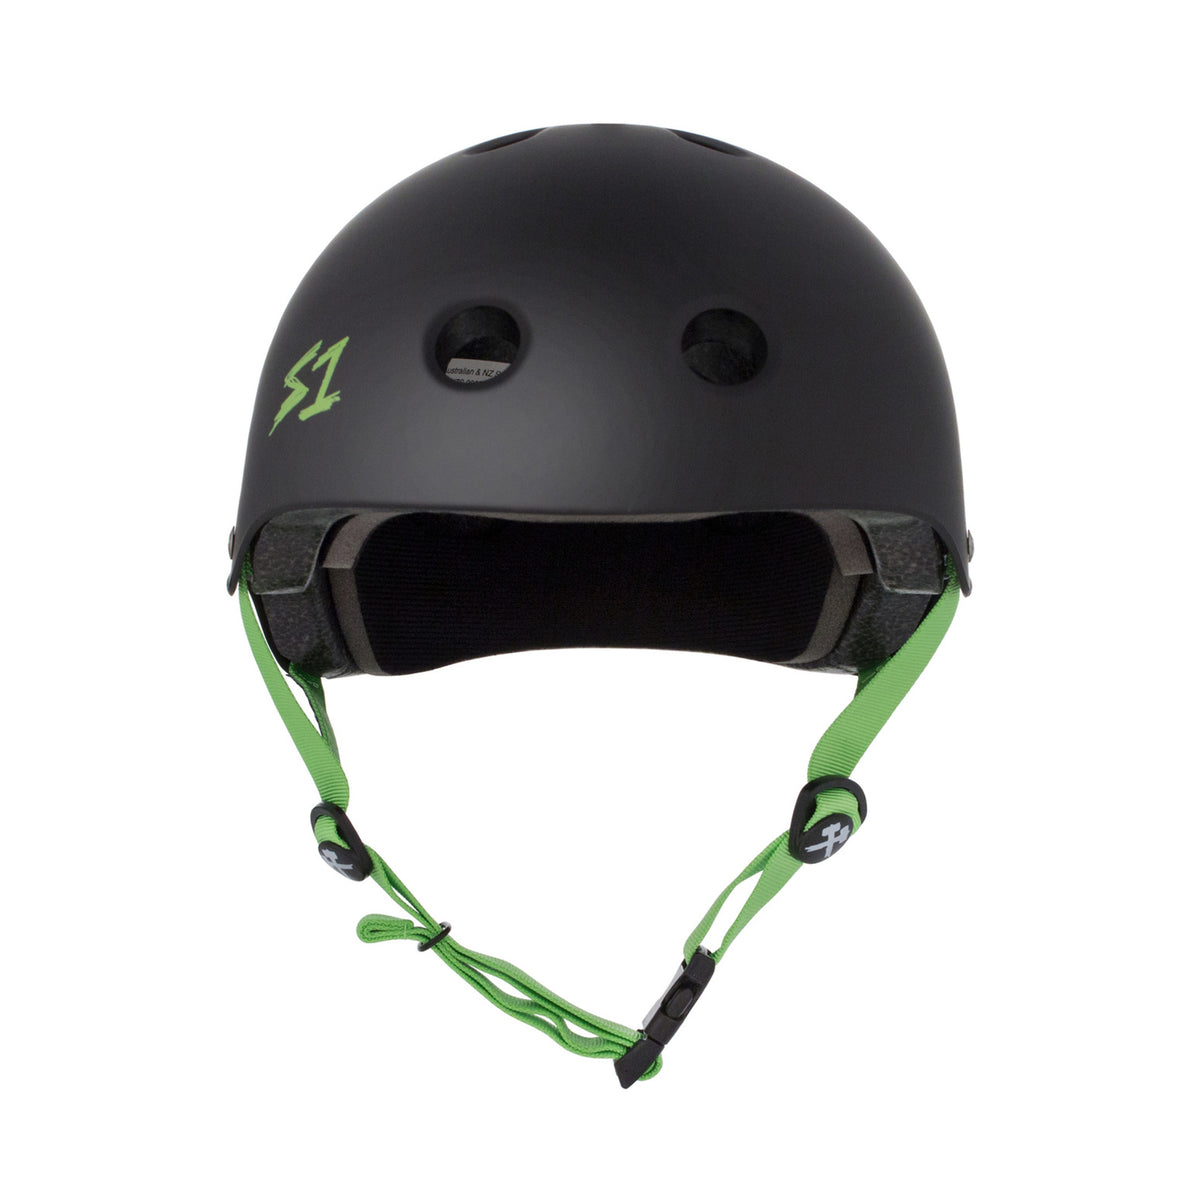 S1 Lifer Helmet - Matte Black w/ Bright Green Straps